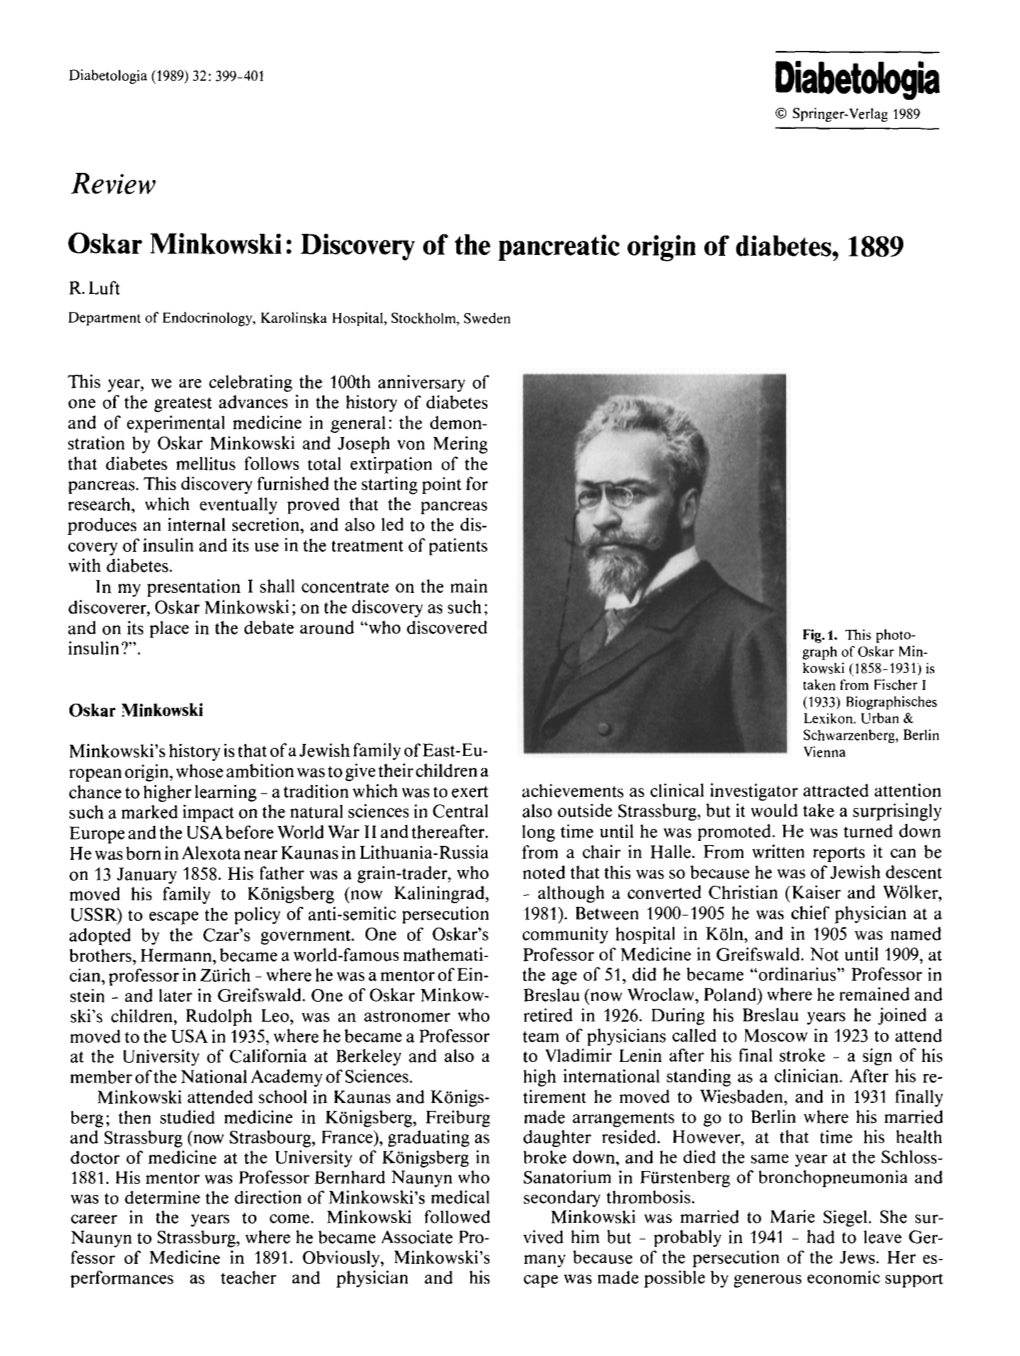 Oskar Minkowski: Discovery of the Pancreatic Origin of Diabetes, 1889